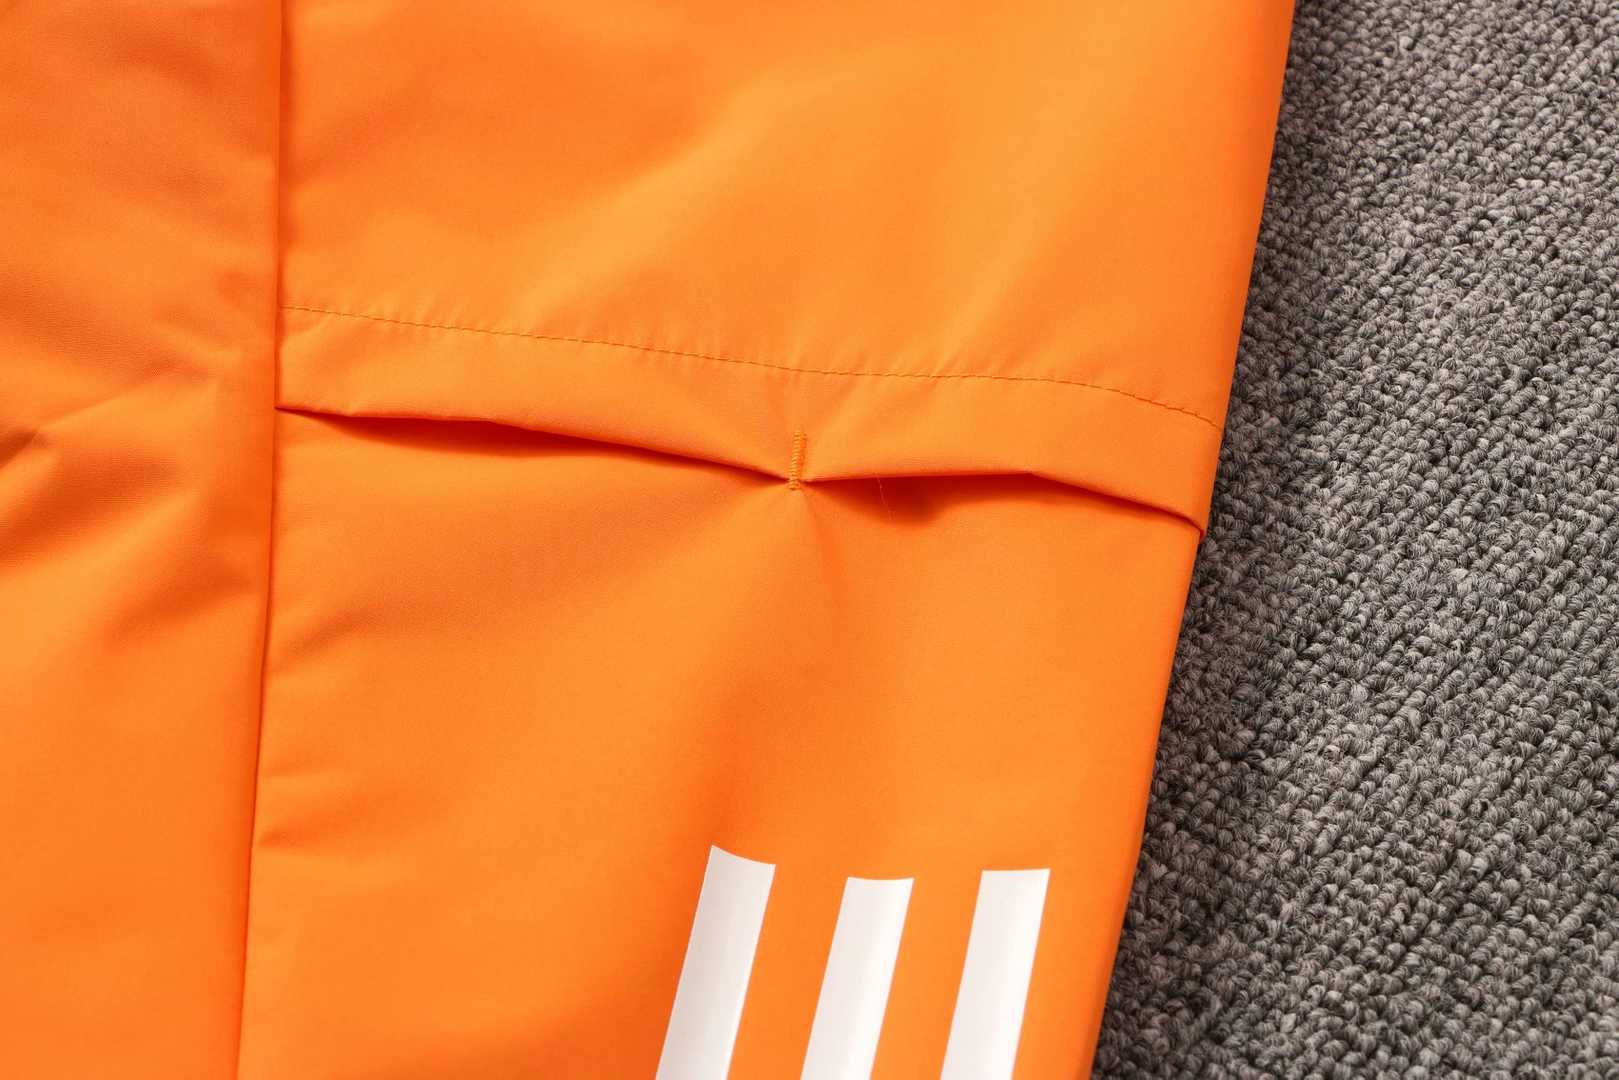 2020/21 Manchester United Orange All Weather Windrunner Soccer Jacket Mens